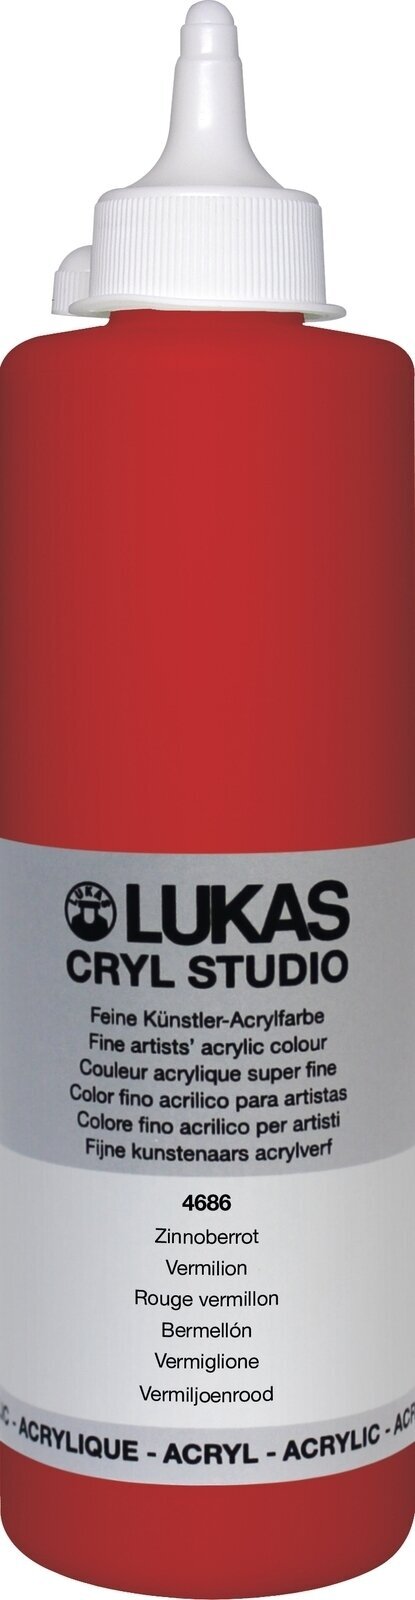 Acrylfarbe Lukas Cryl Studio Acrylfarbe 500 ml Vermilion